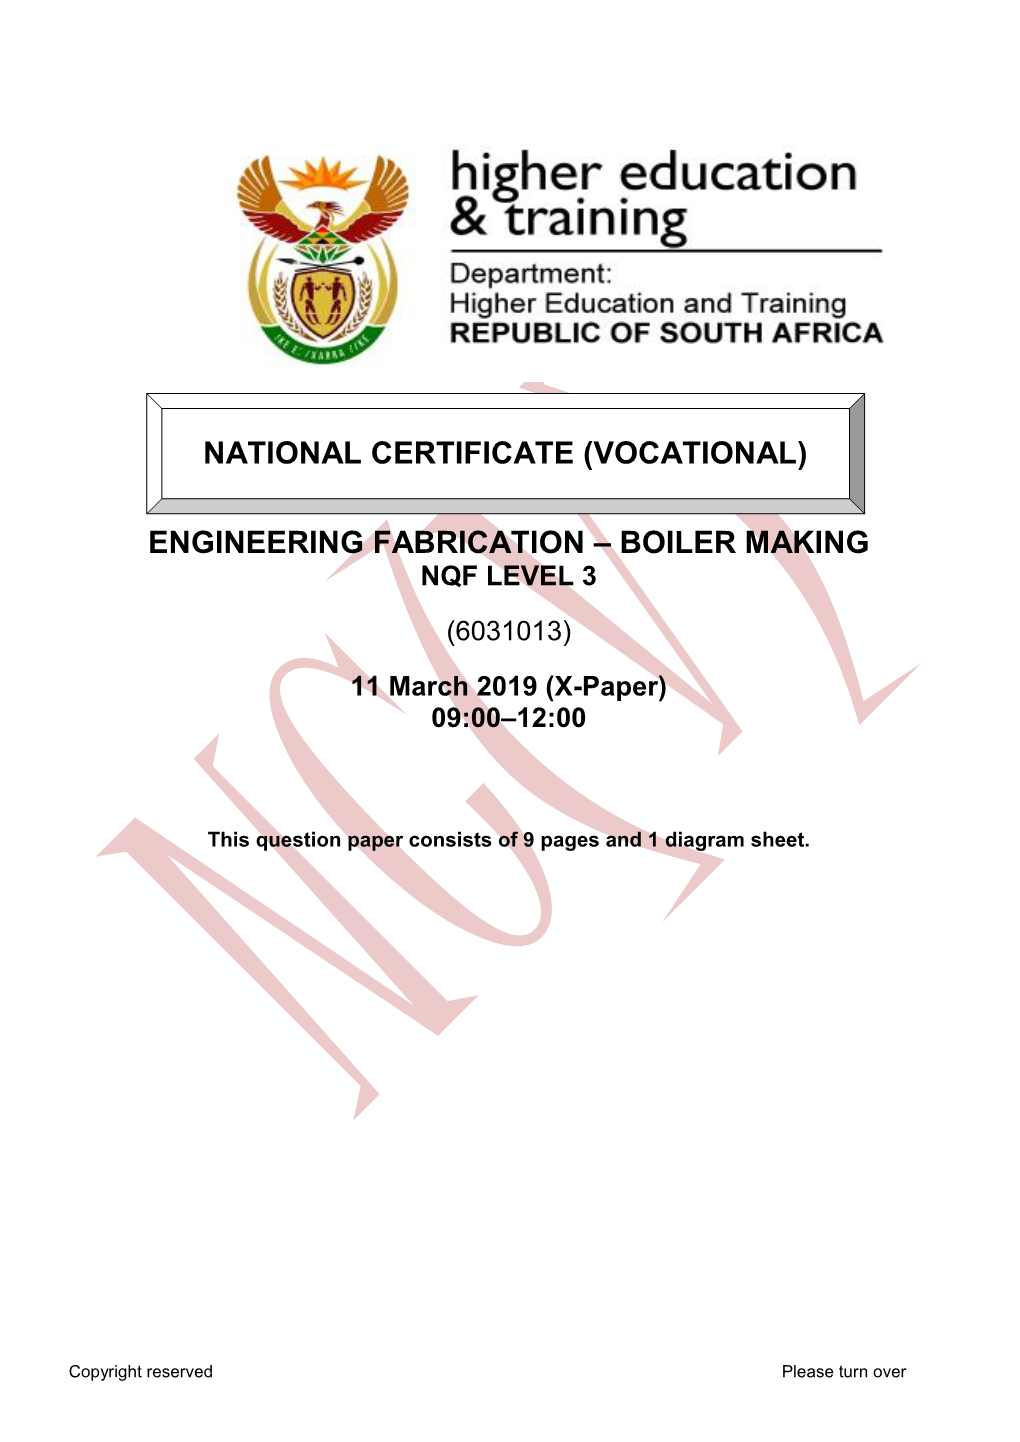 Engineering Fabrication – Boiler Making National